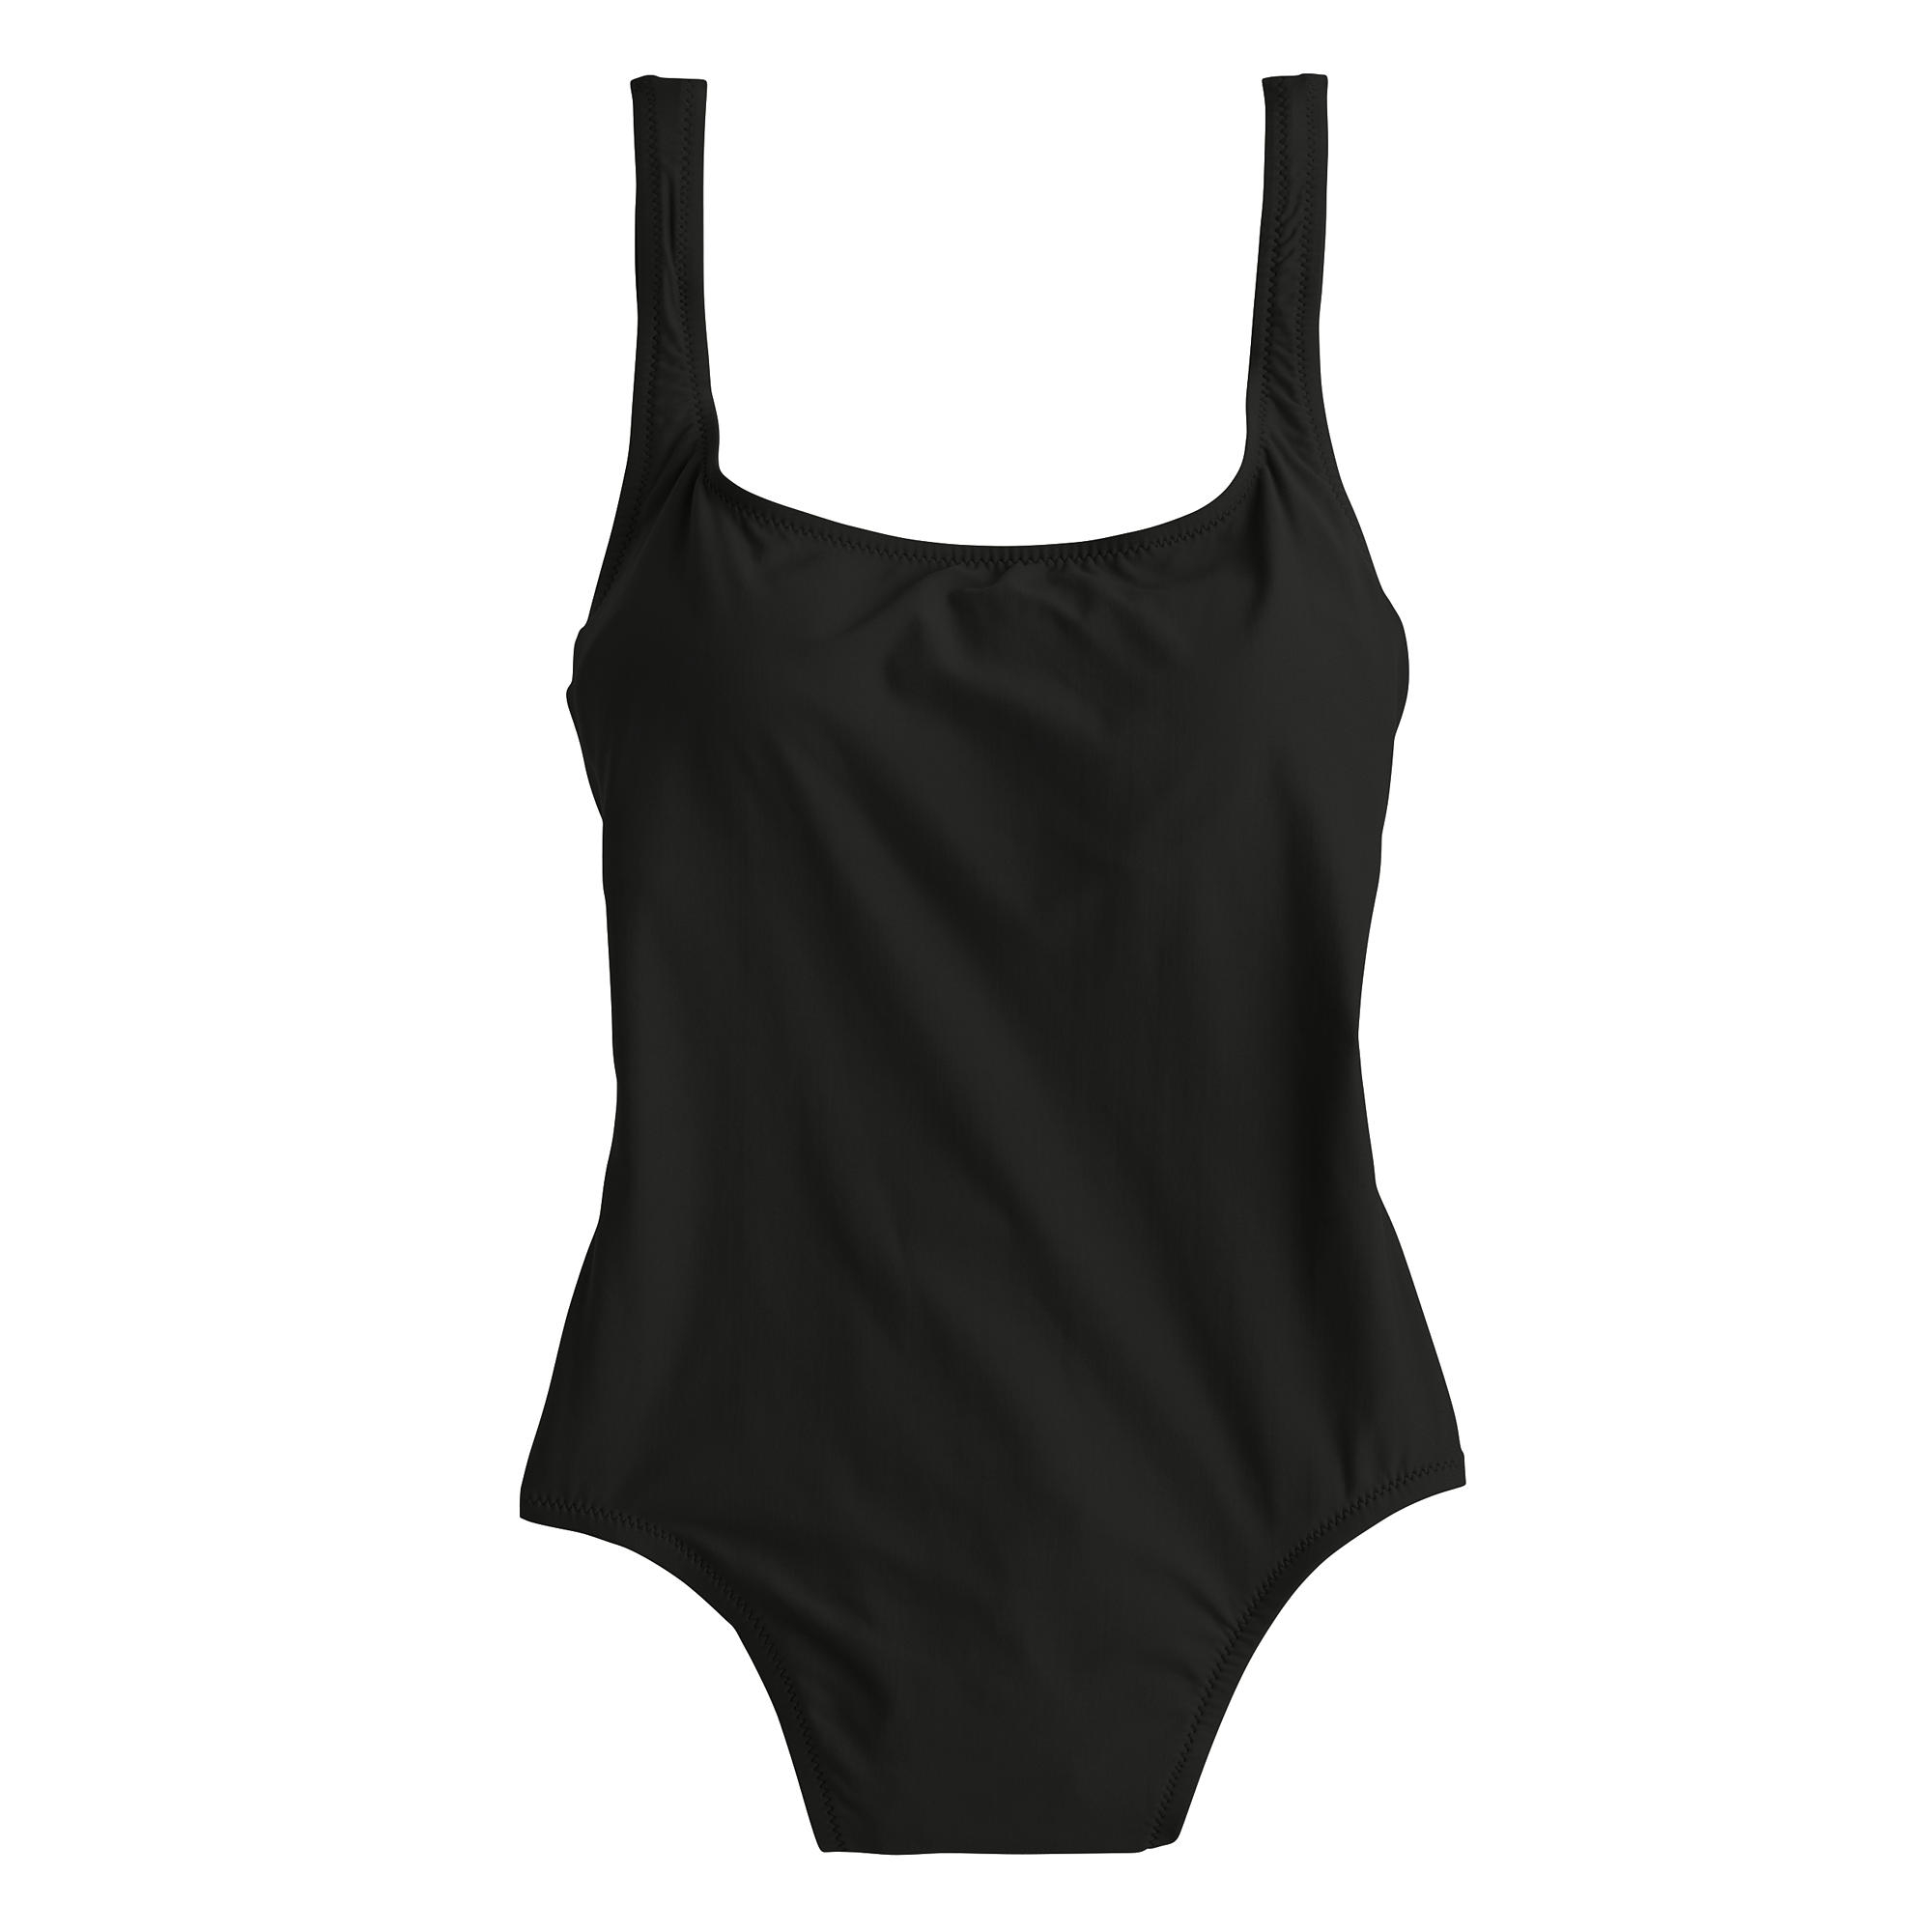 J.crew Long Torso Scoopback One-piece Swimsuit in Black | Lyst